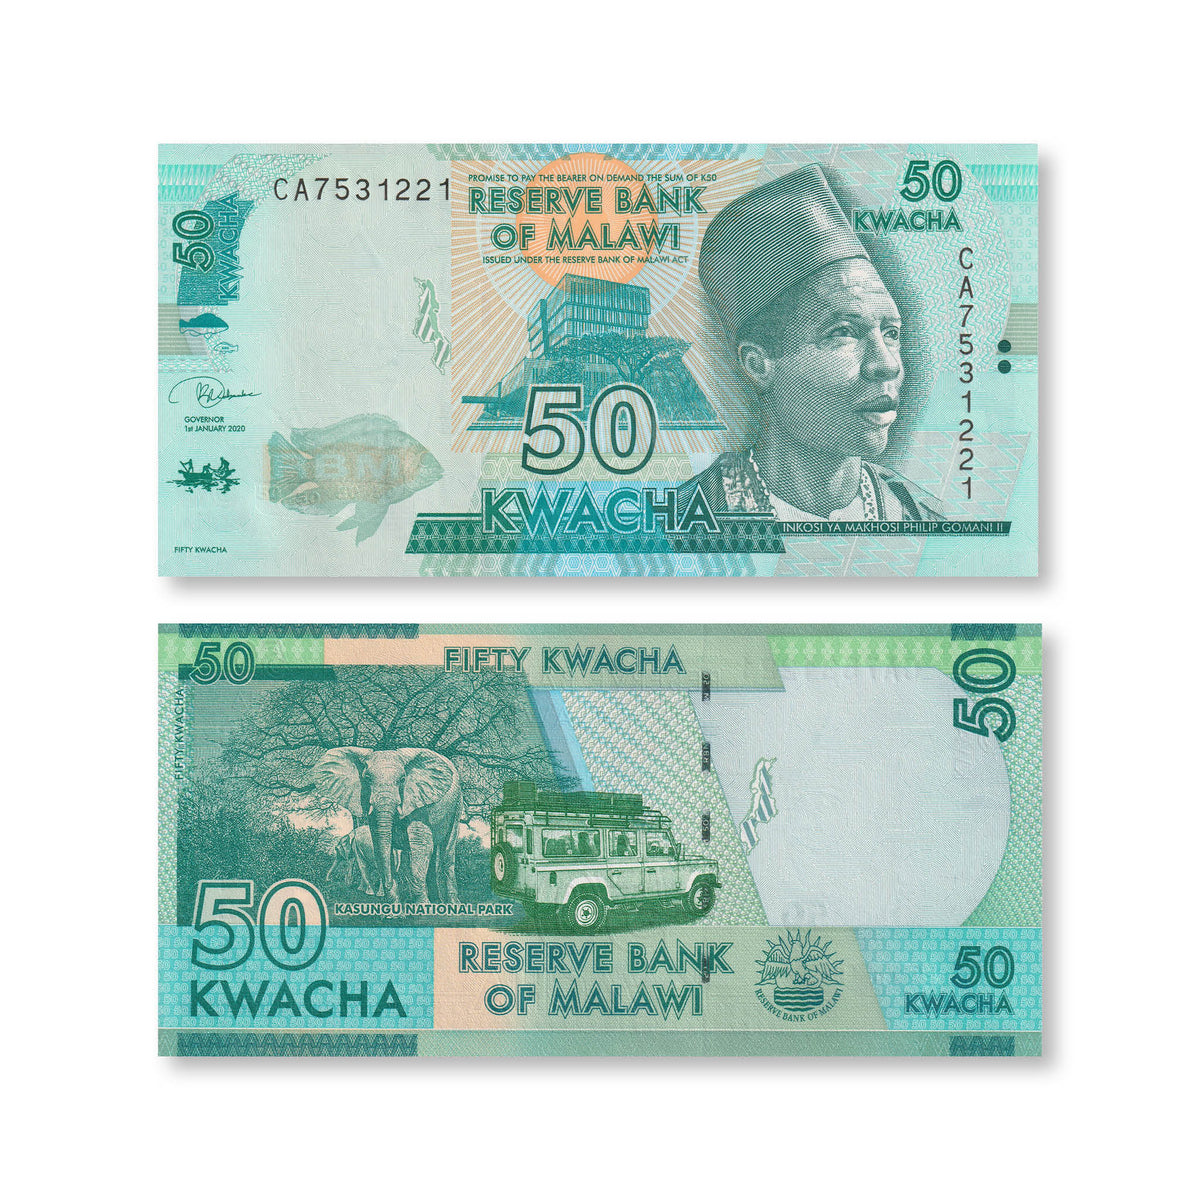 Malawi 50 Kwacha, 2020, B158g, P64, UNC - Robert's World Money - World Banknotes